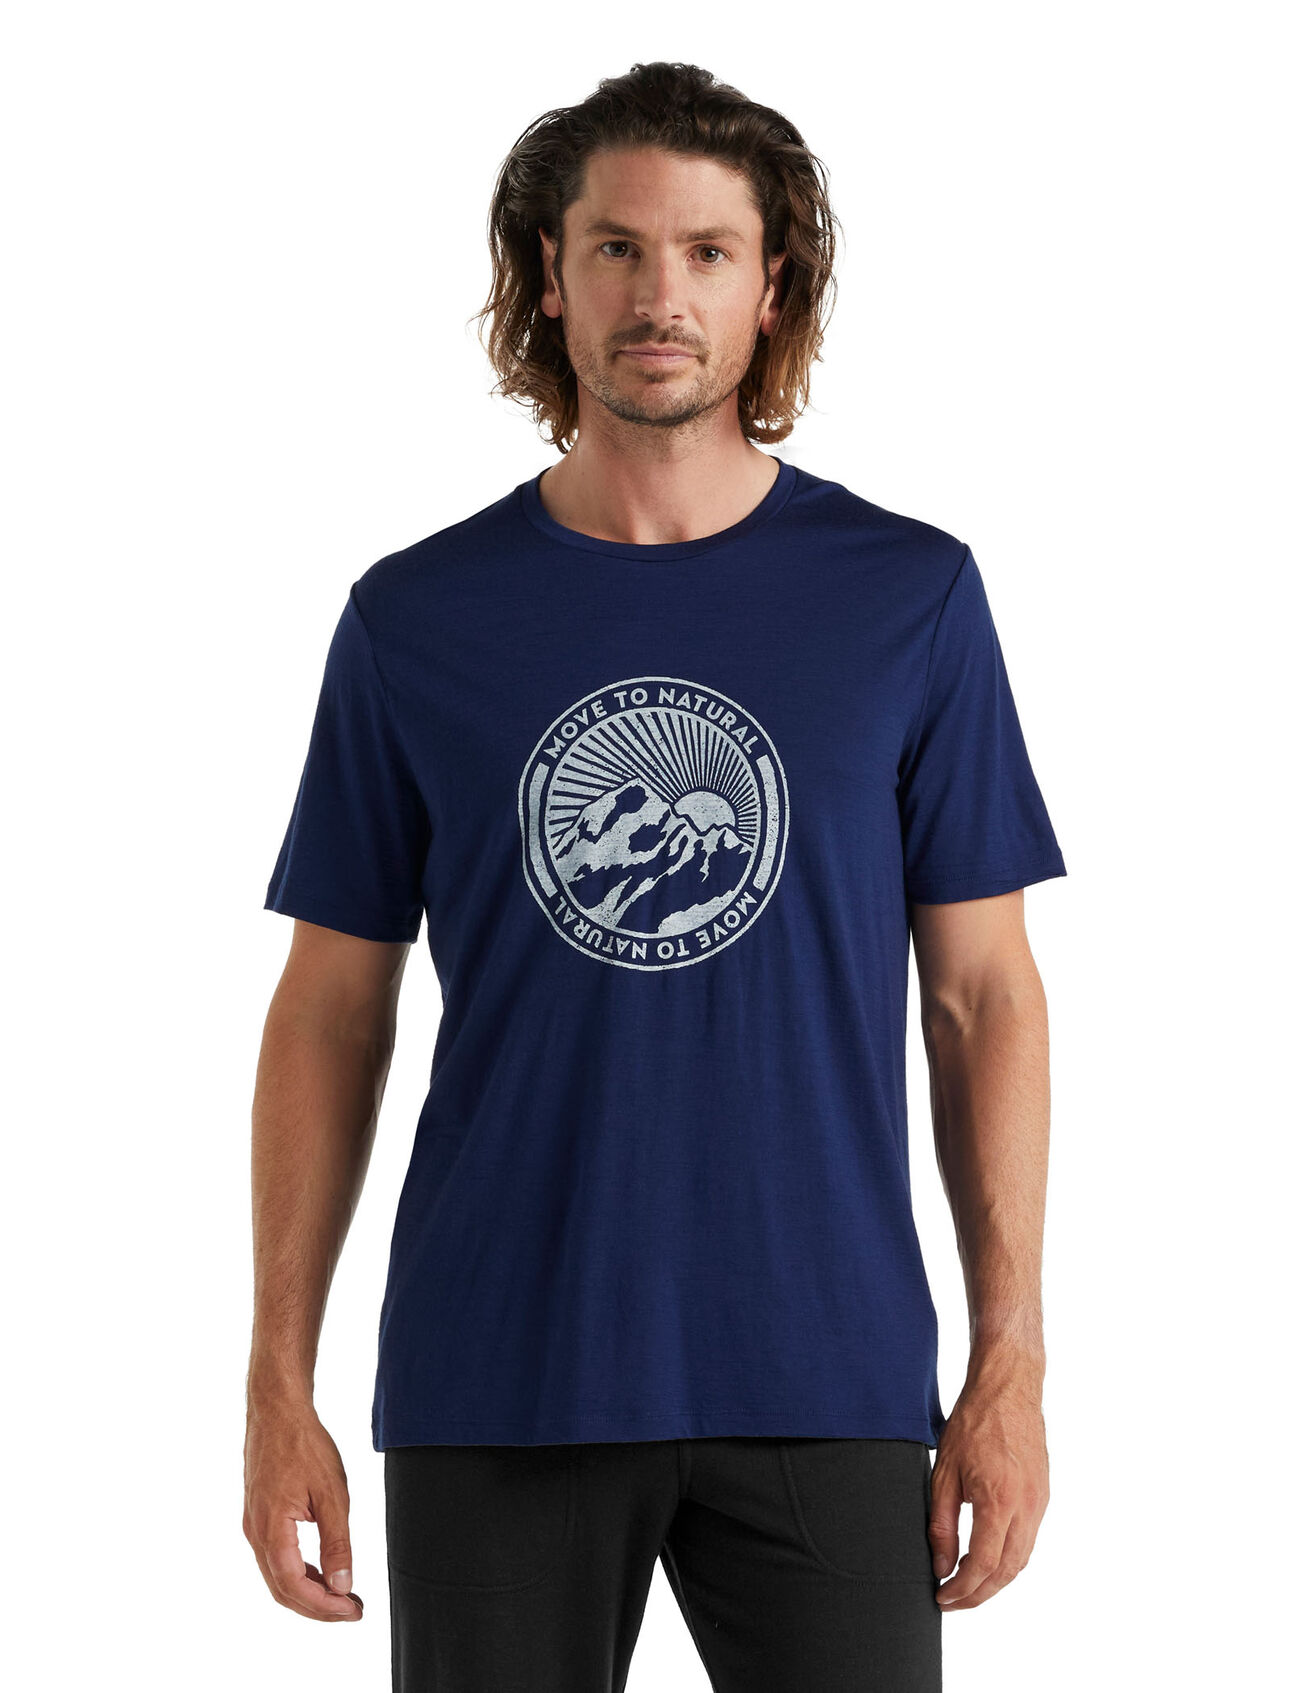 Merino Tech Lite II Short Sleeve T-Shirt Move to Natural Mountain